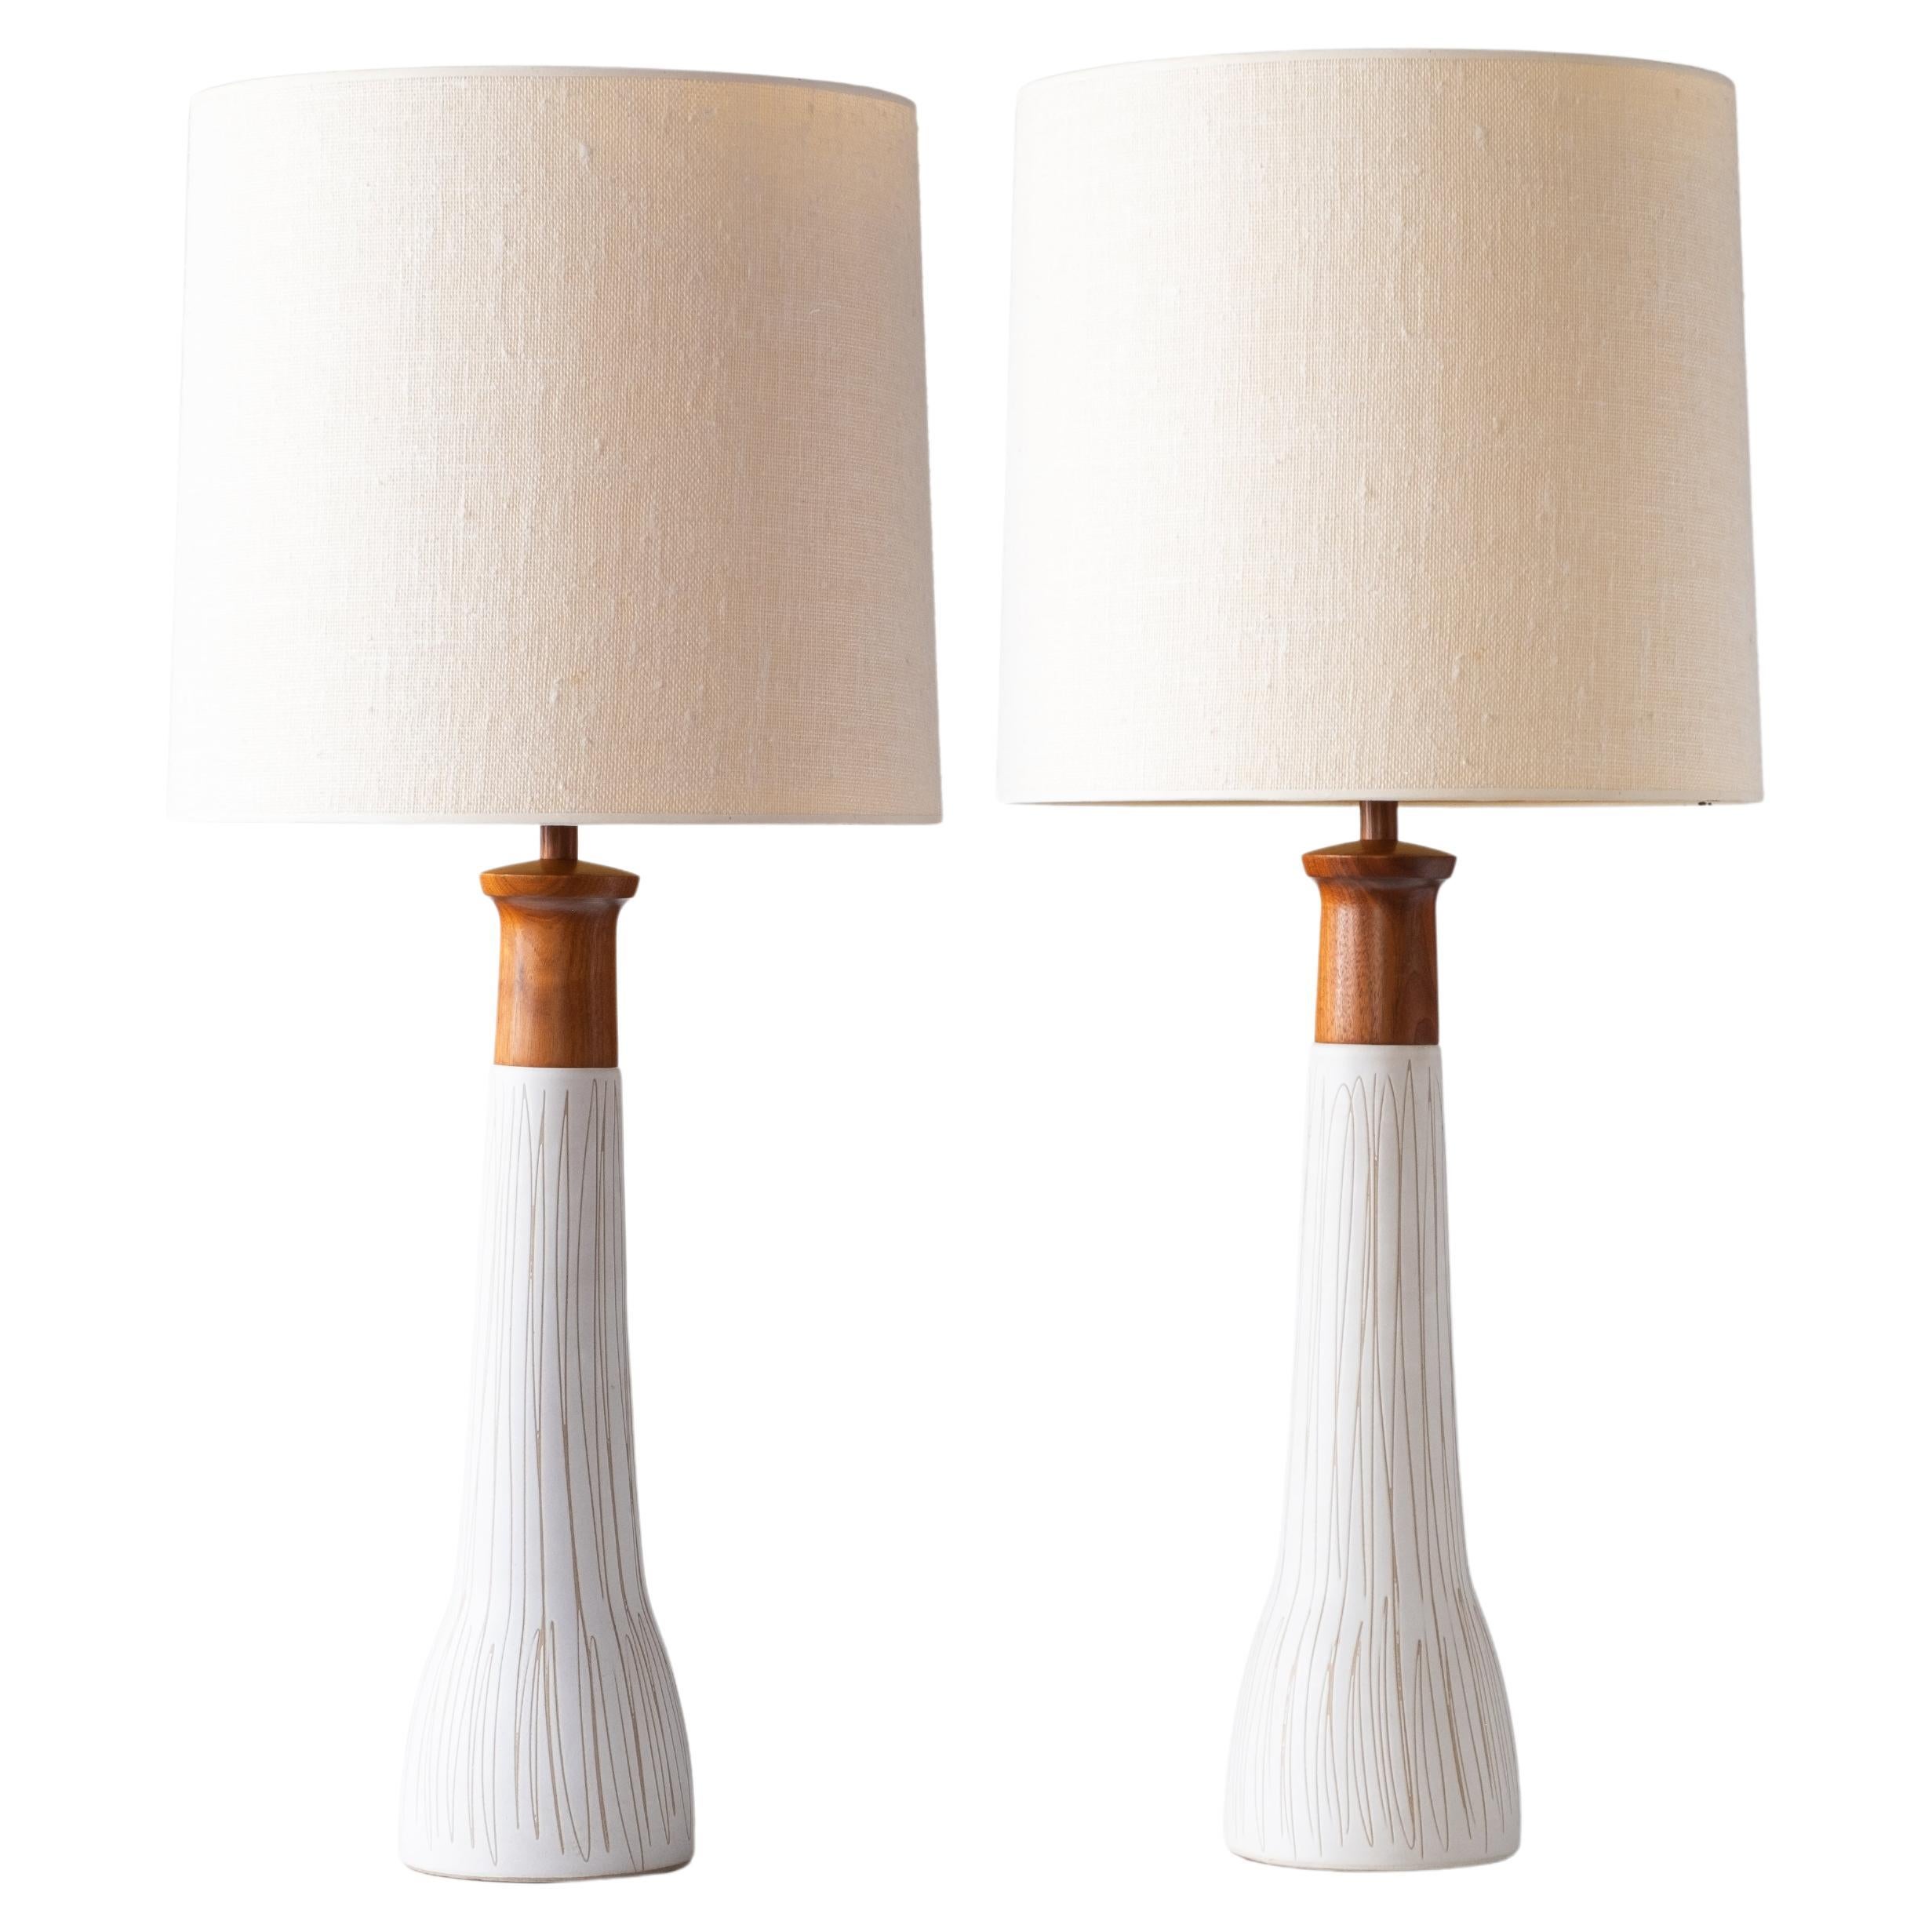 Gordon & Jane Martz / Marshall Studios Ceramic Table Lamps, White Glaze For Sale